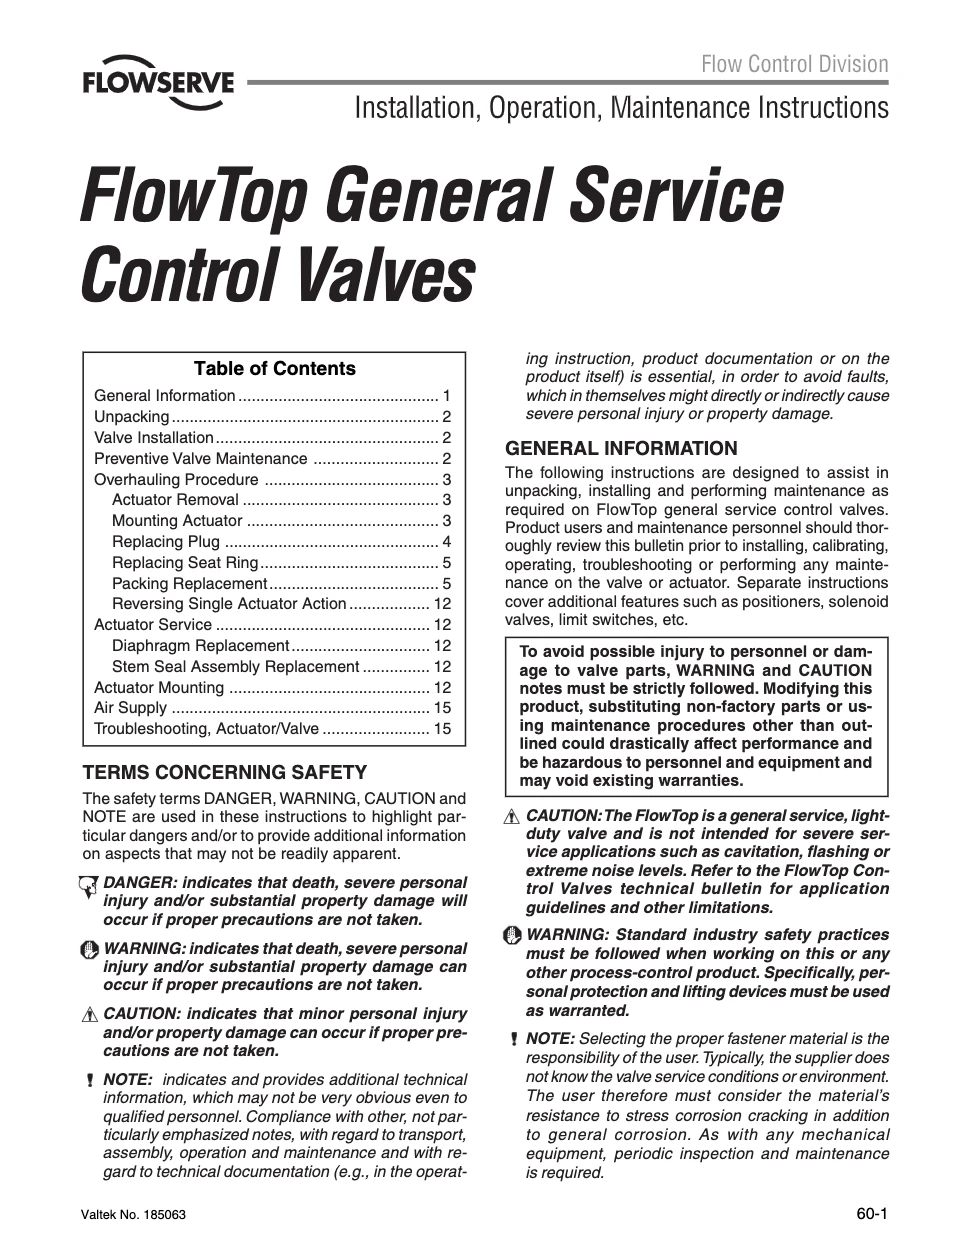 Valtek FlowTop通用服务控制阀使用说明(IOM)